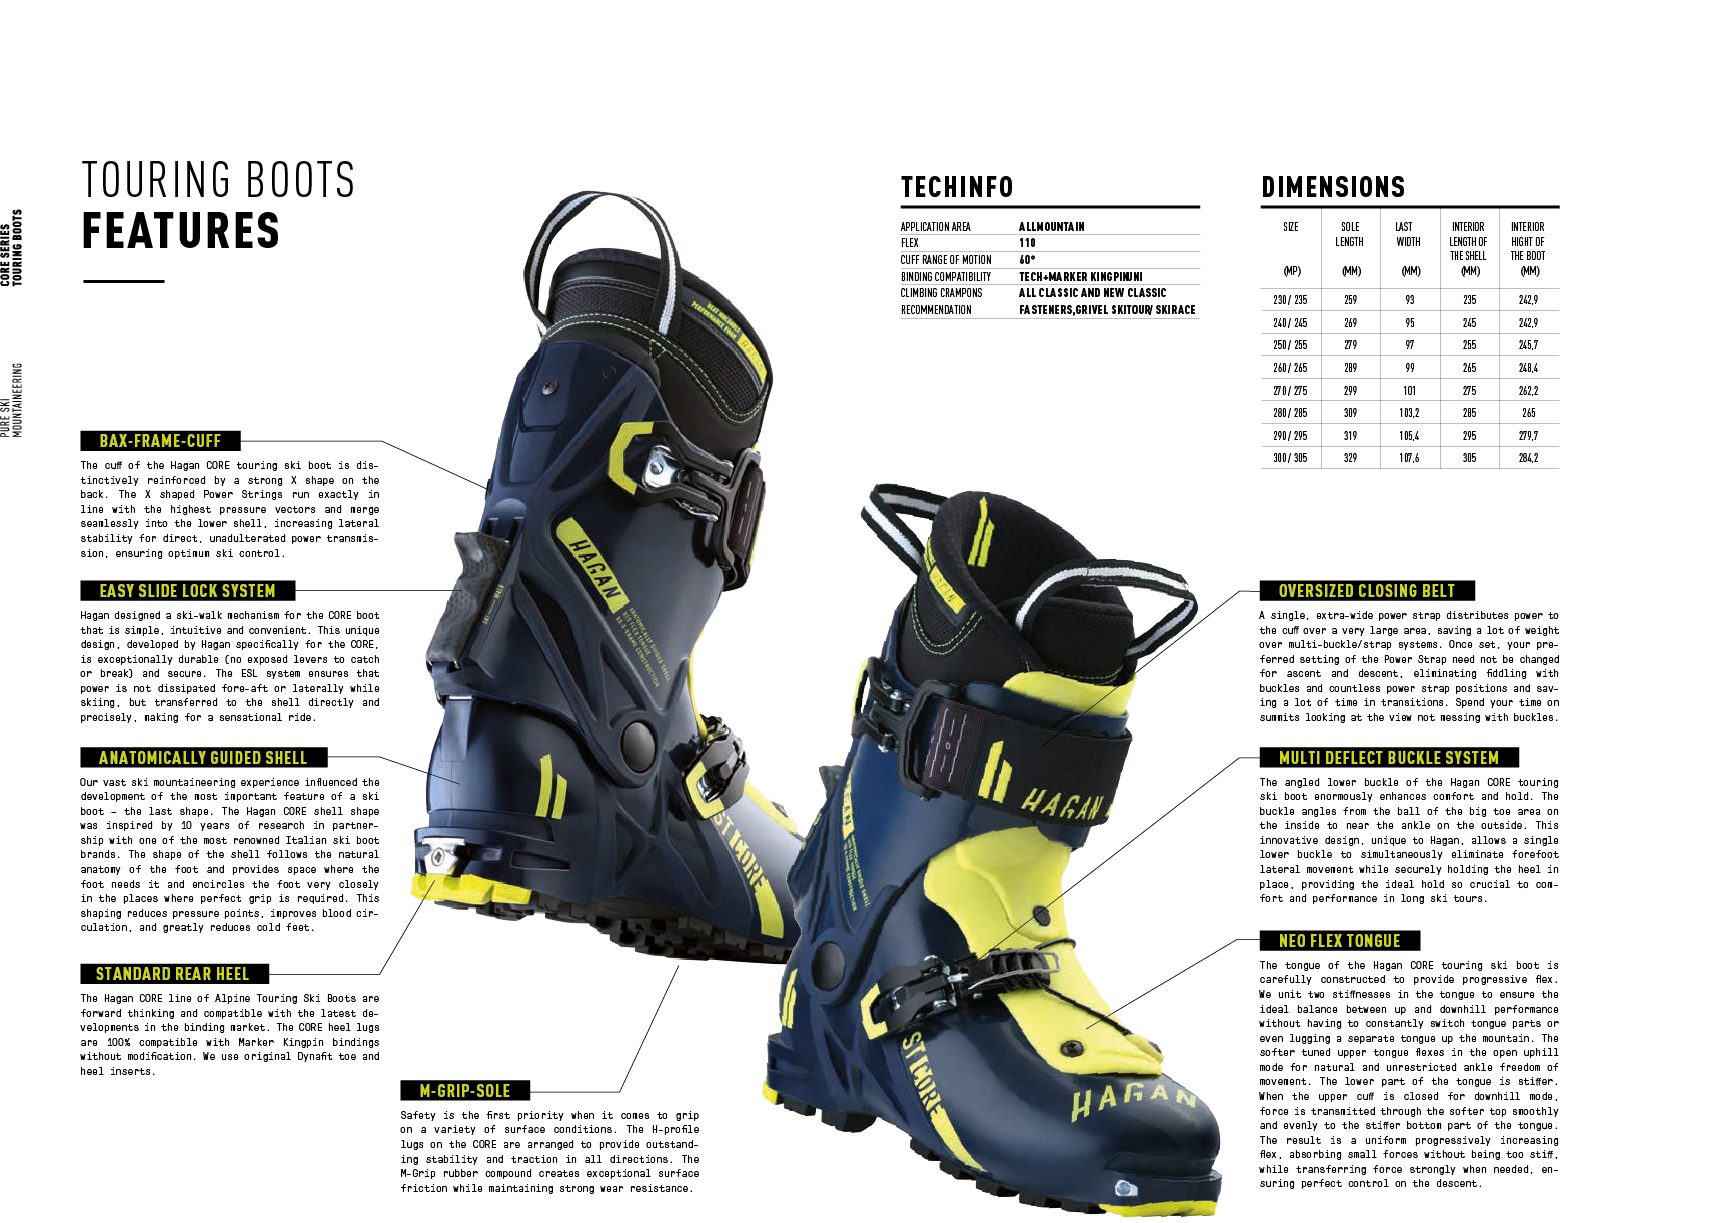 265 mm ski boot size